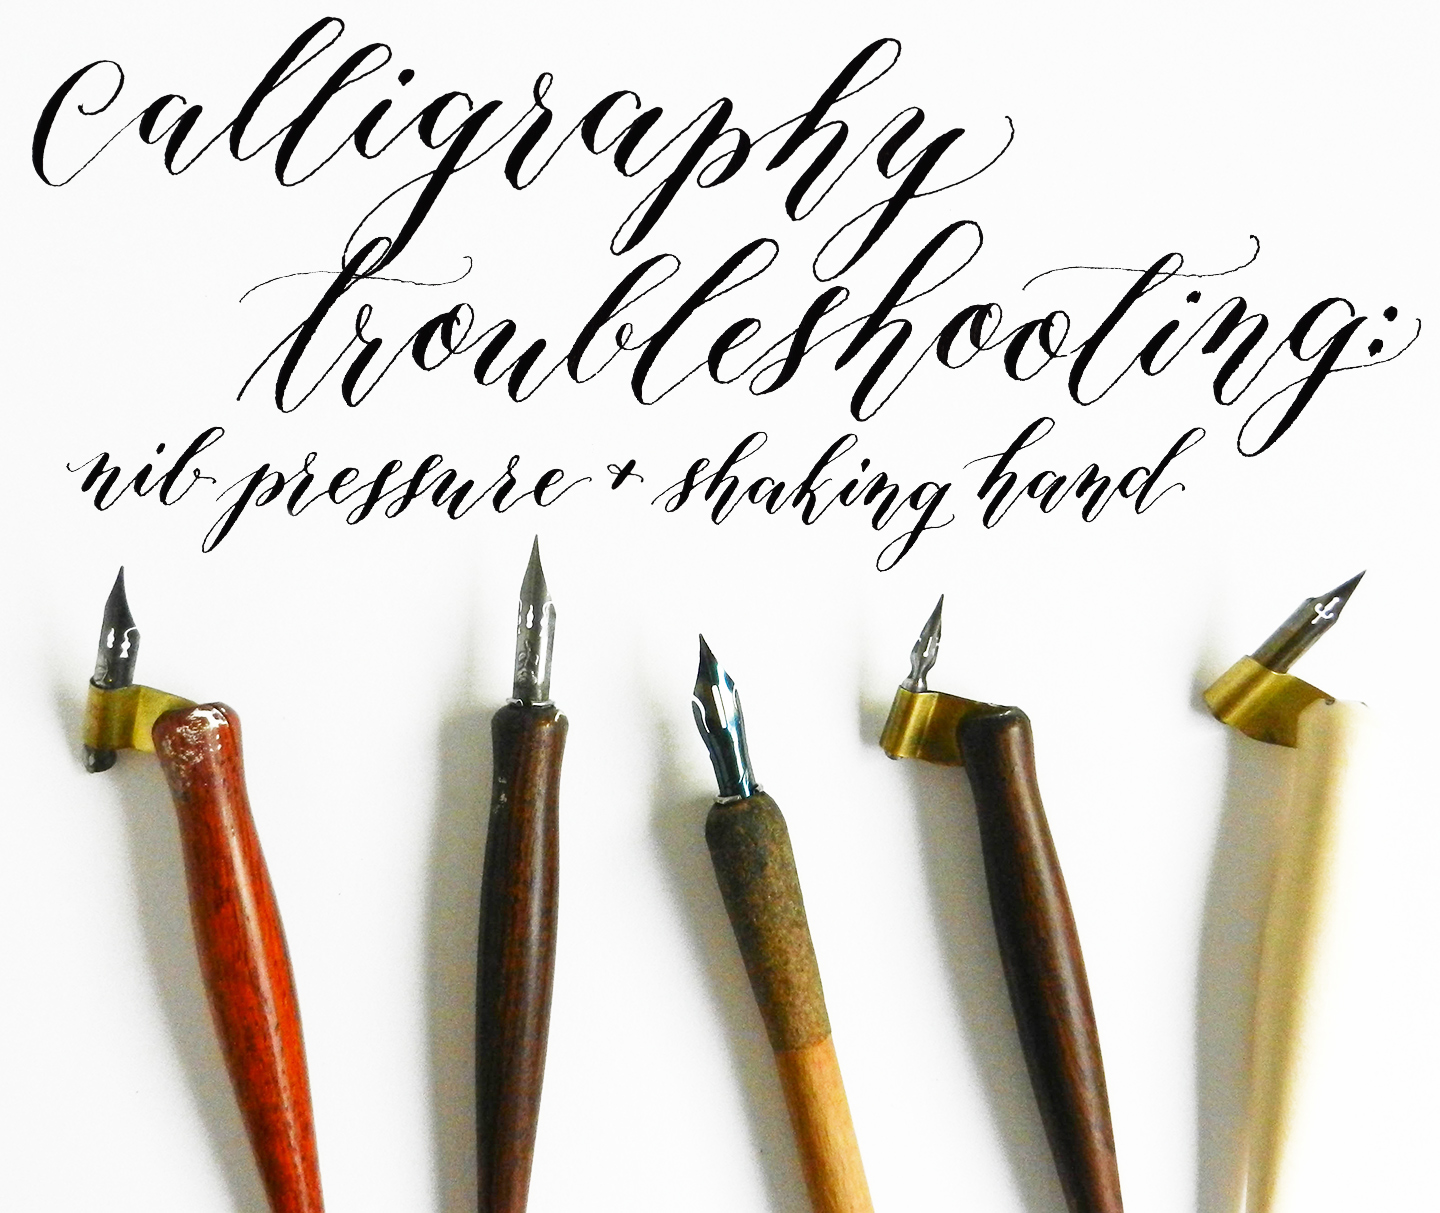 Calligraphy Troubleshooting: Nib Pressure + Shaking Hand